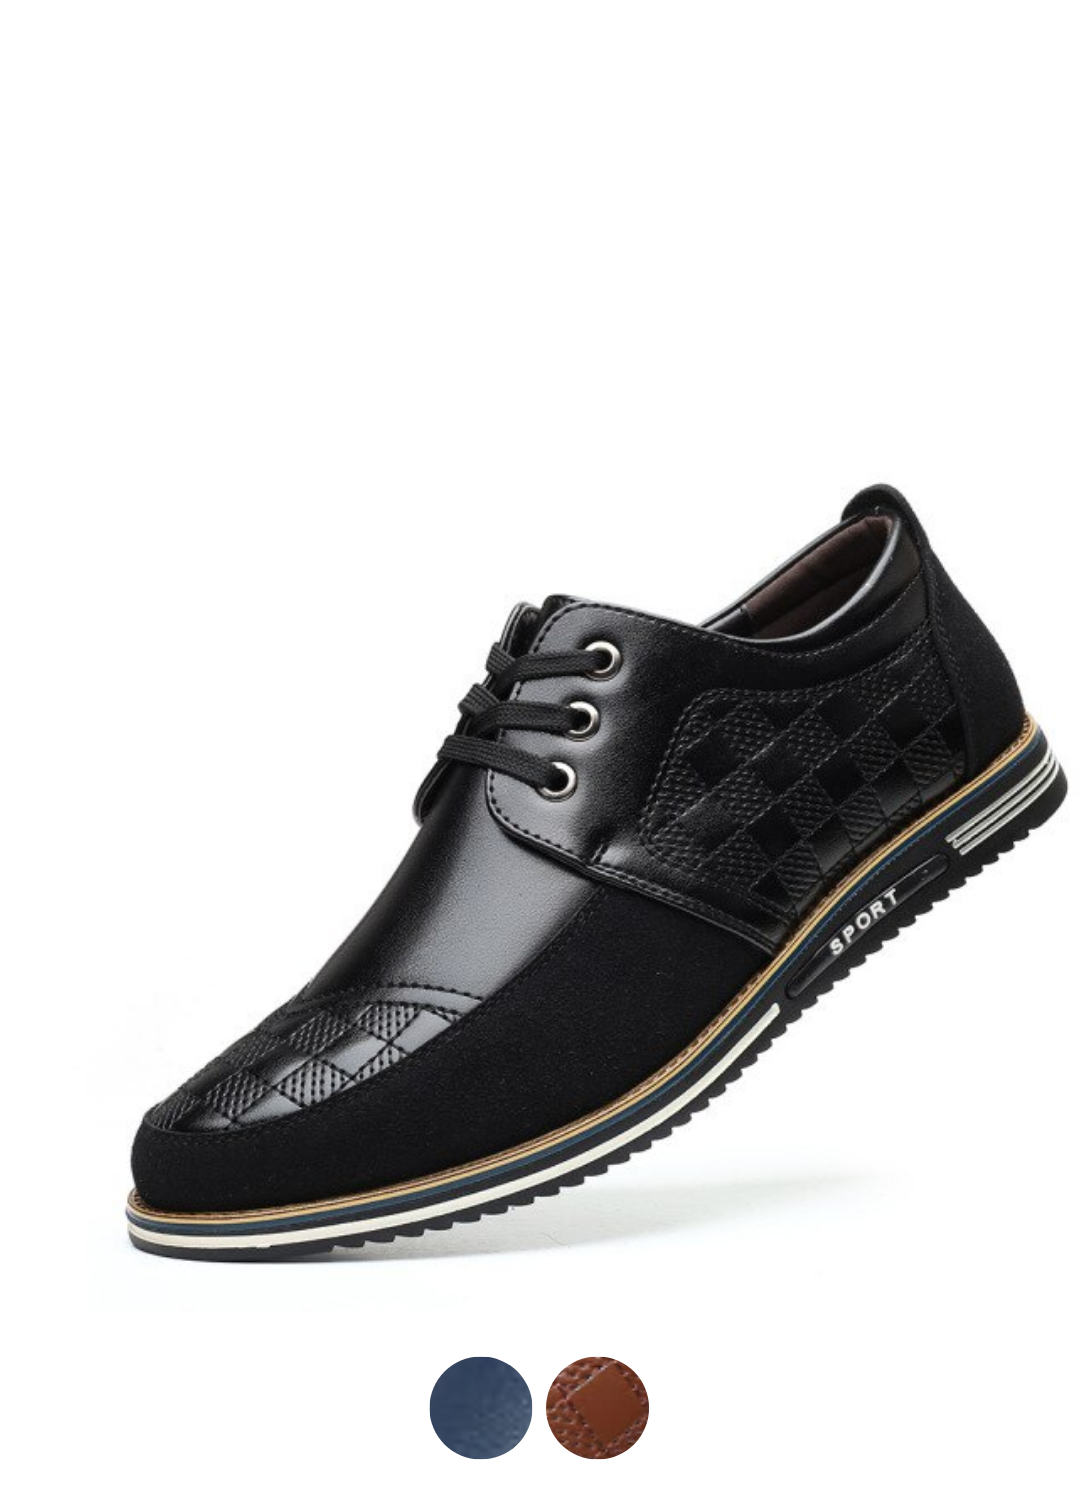 Galem Men's Loafers Fashion Shoes | Ultrasellershoes.com – USS® Shoes